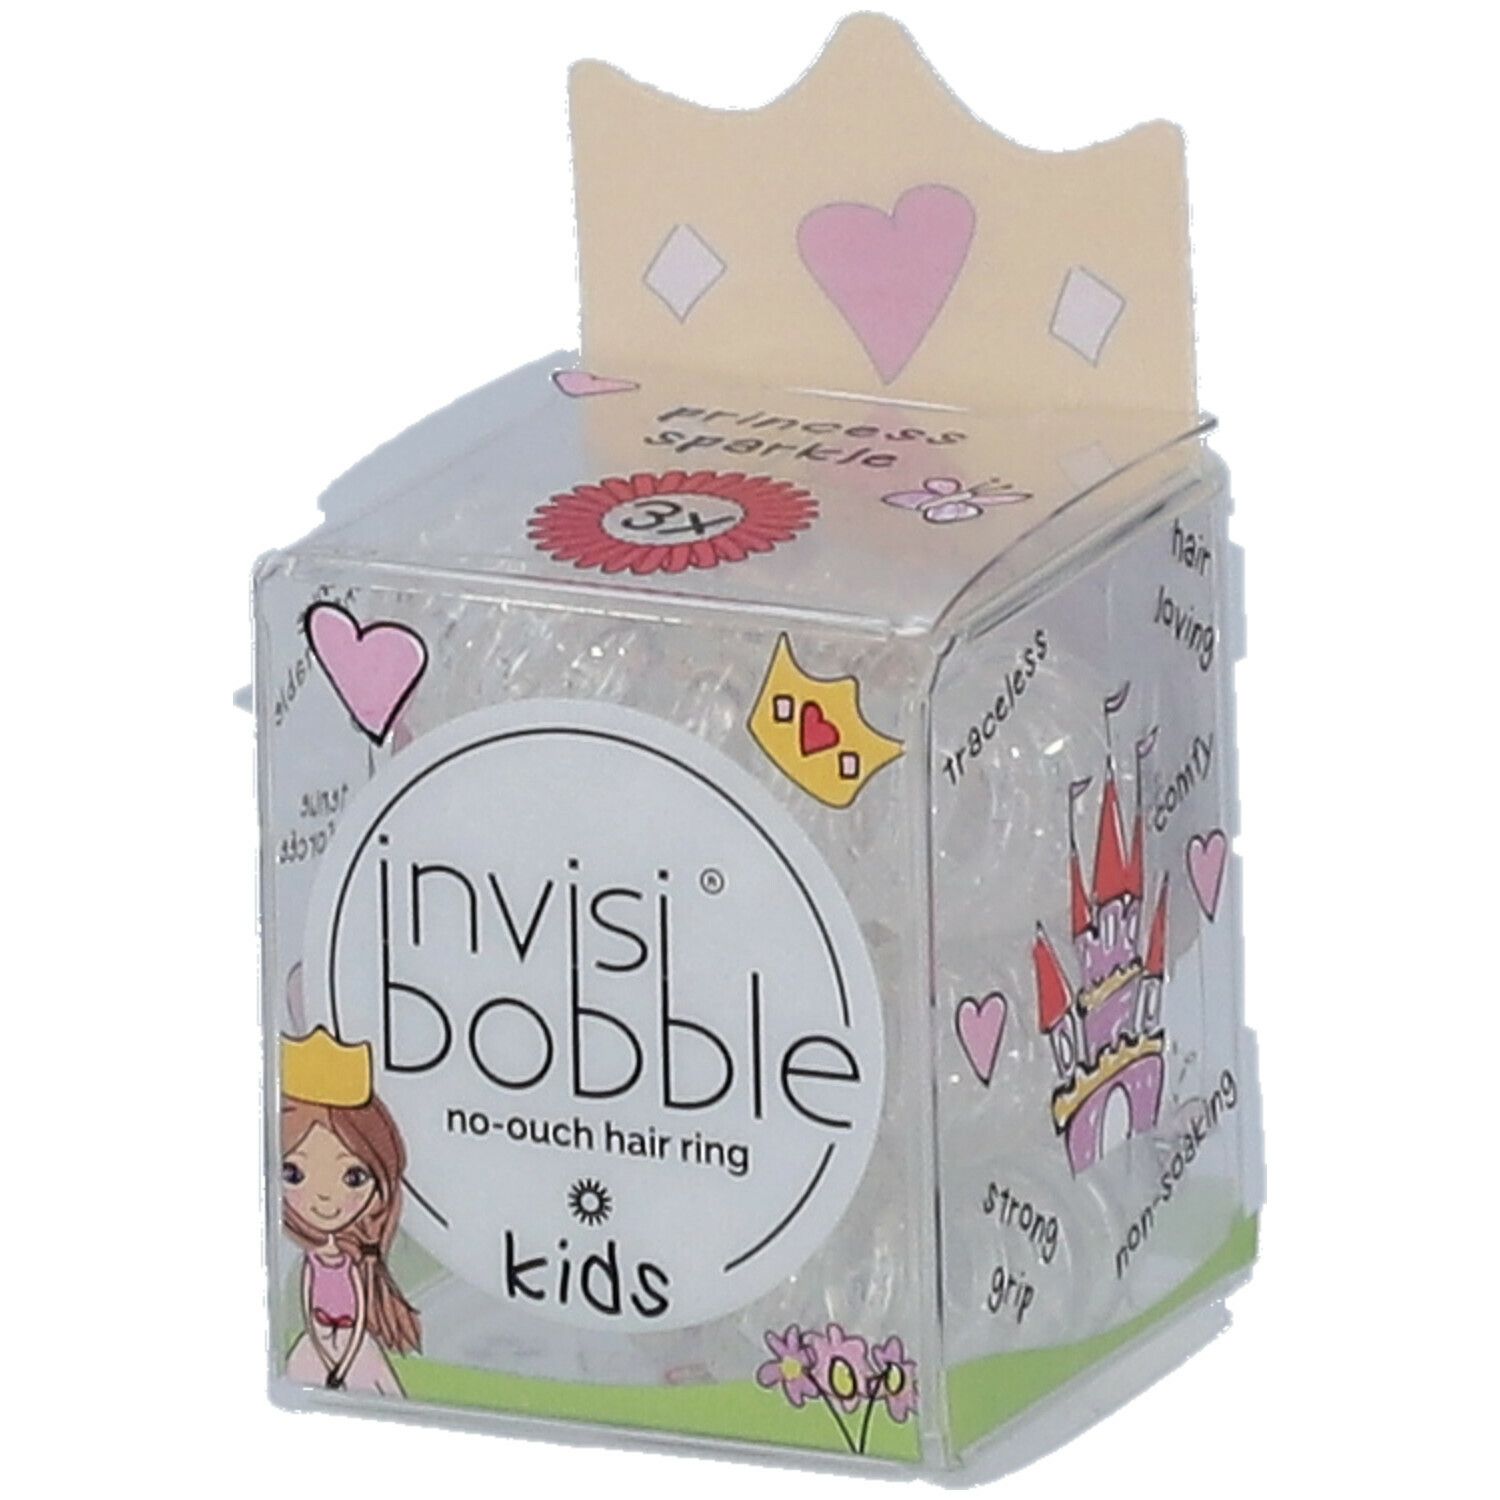 invisibobble® Kids Princess Sparkle